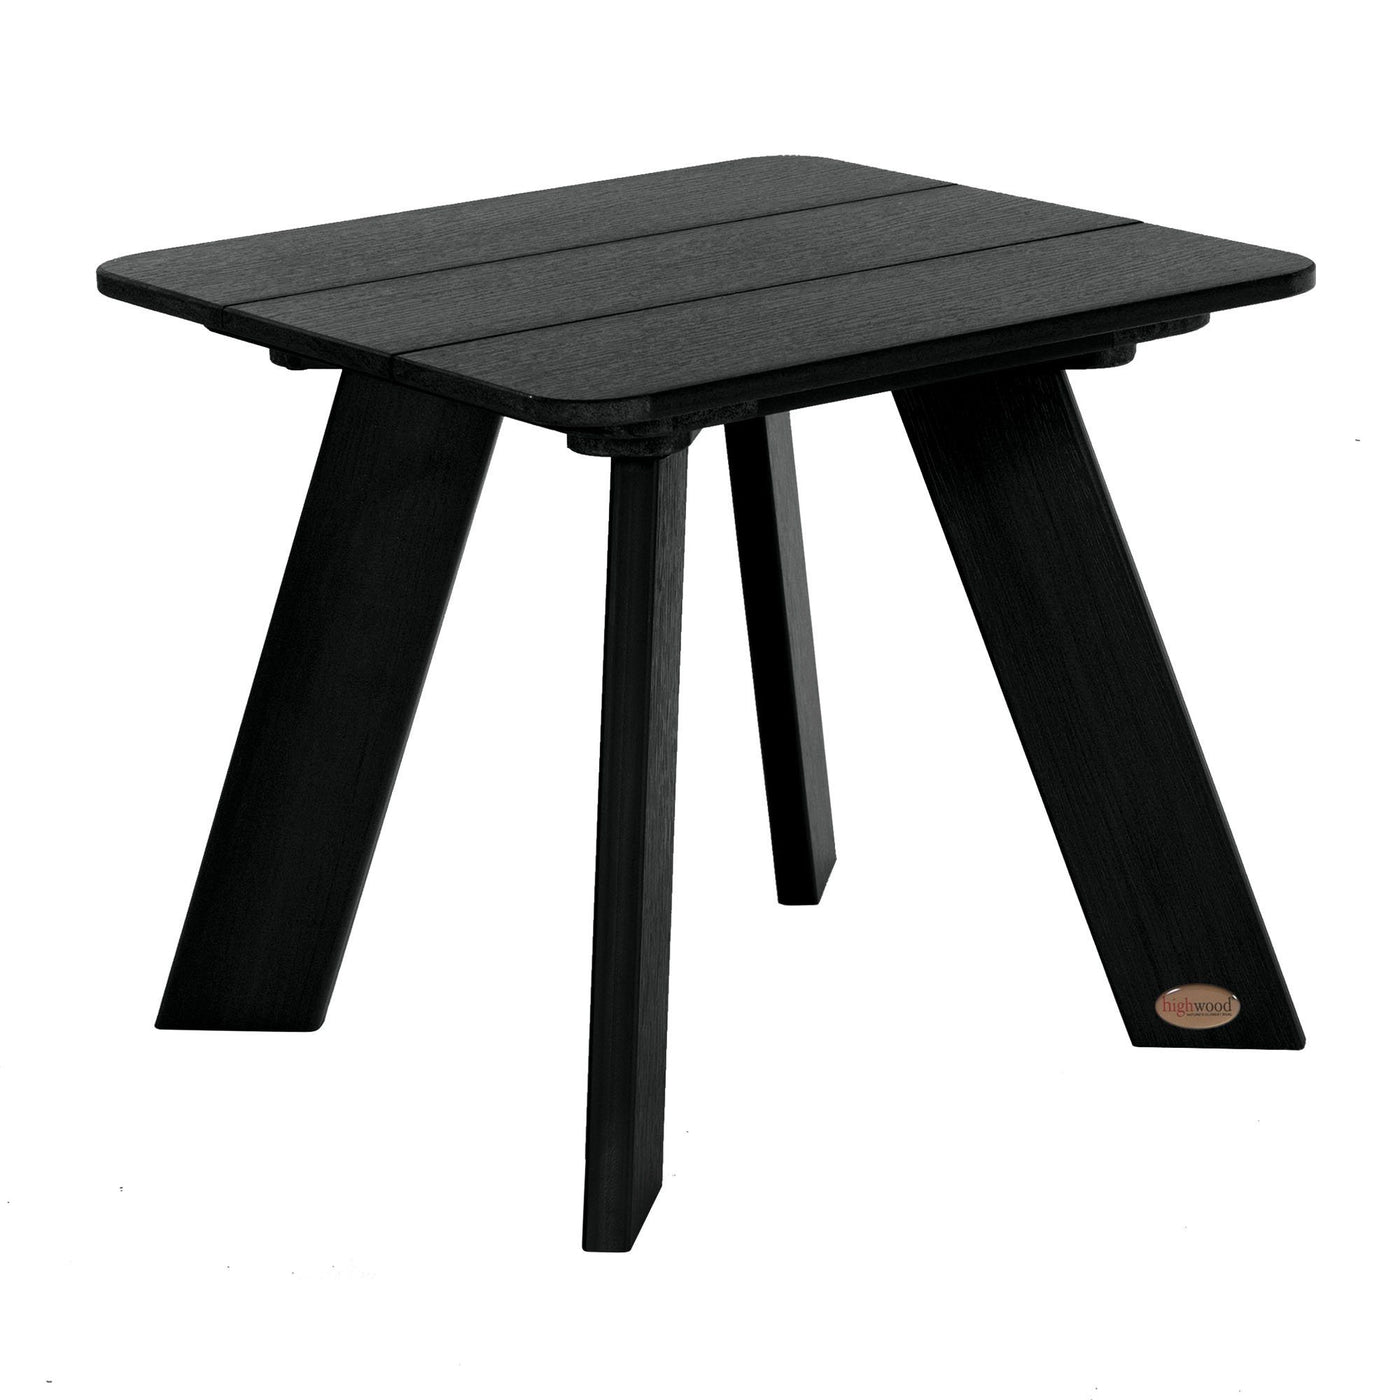 Italica Modern Side Table in Black.